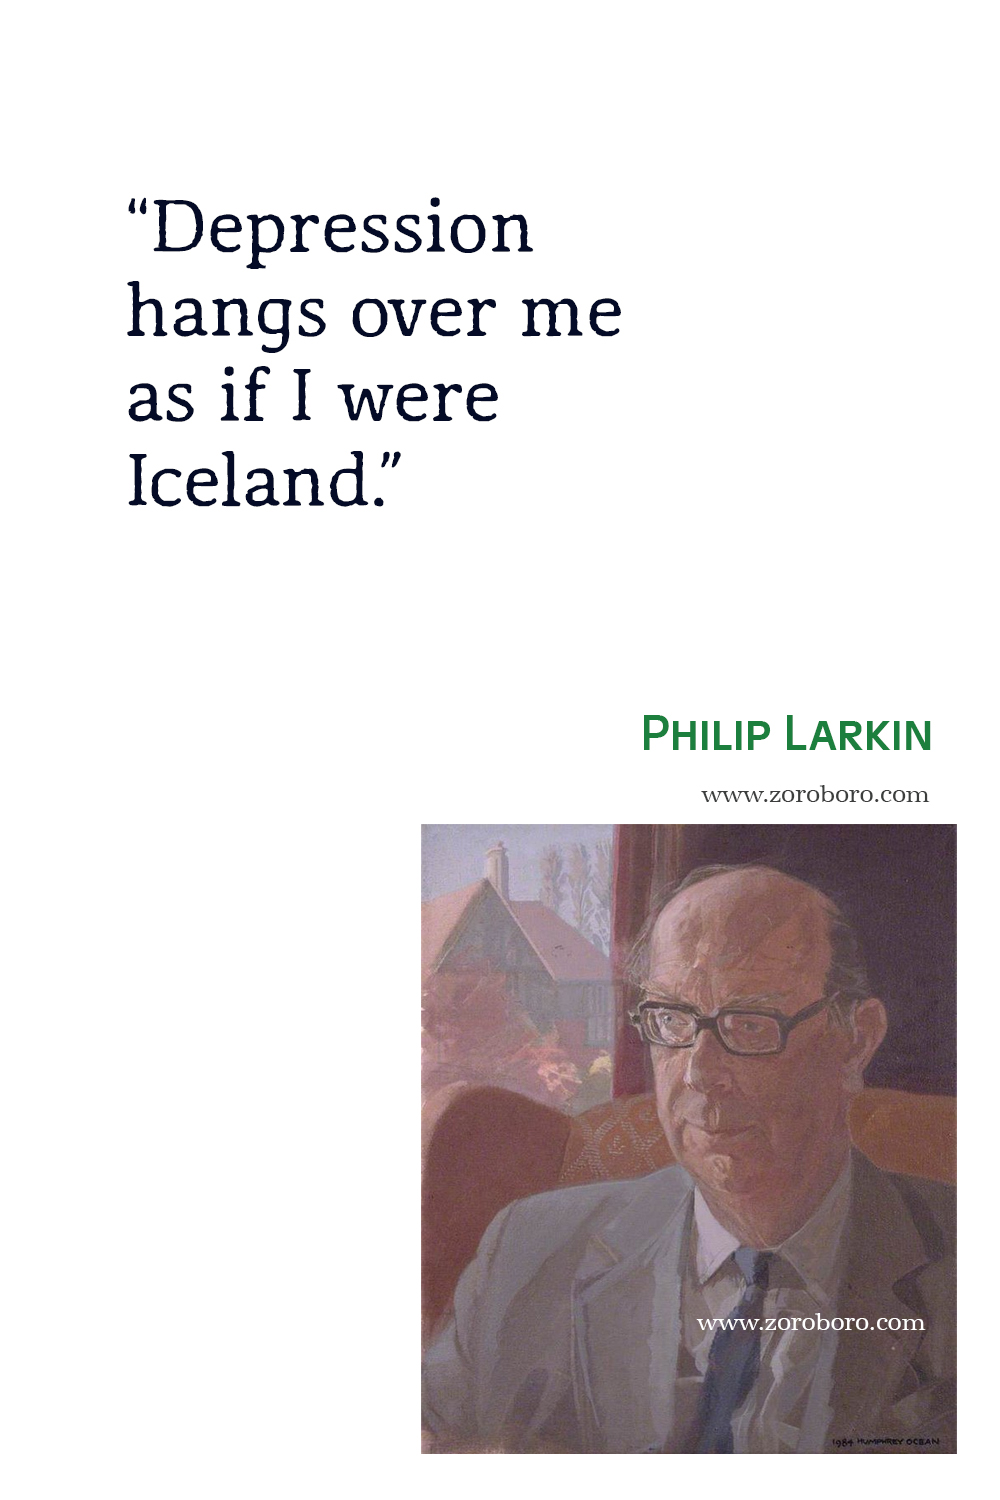 Philip Larkin Quotes, Philip Larkin Poet, Philip Larkin Poetry, Philip Larkin Poems, Philip Larkin Books Quotes, Philip Larkin: Selected Poems